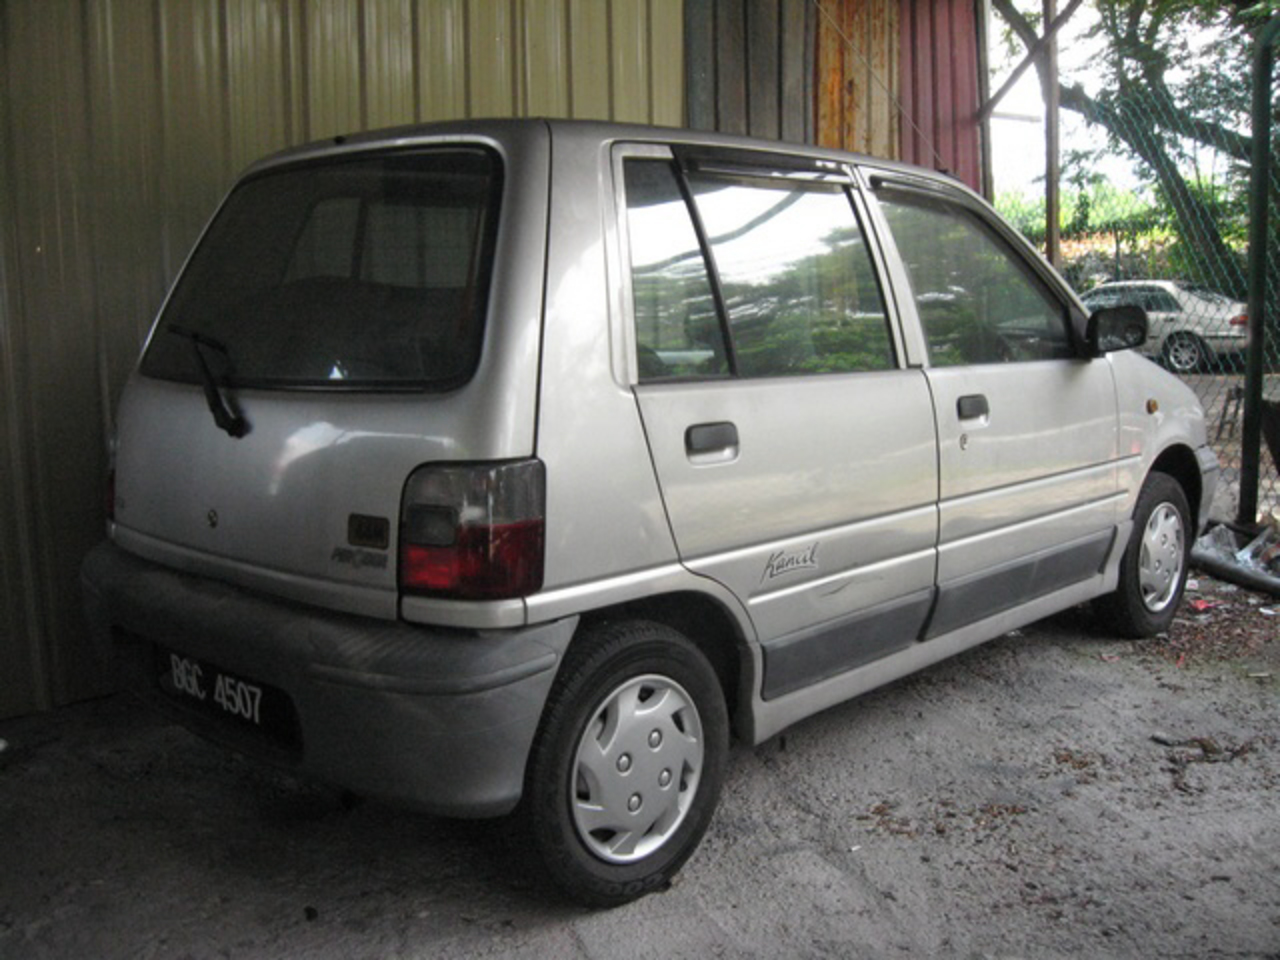 PERODUA KANCIL 660 (M) | Used Car for Sale | Motor Trader